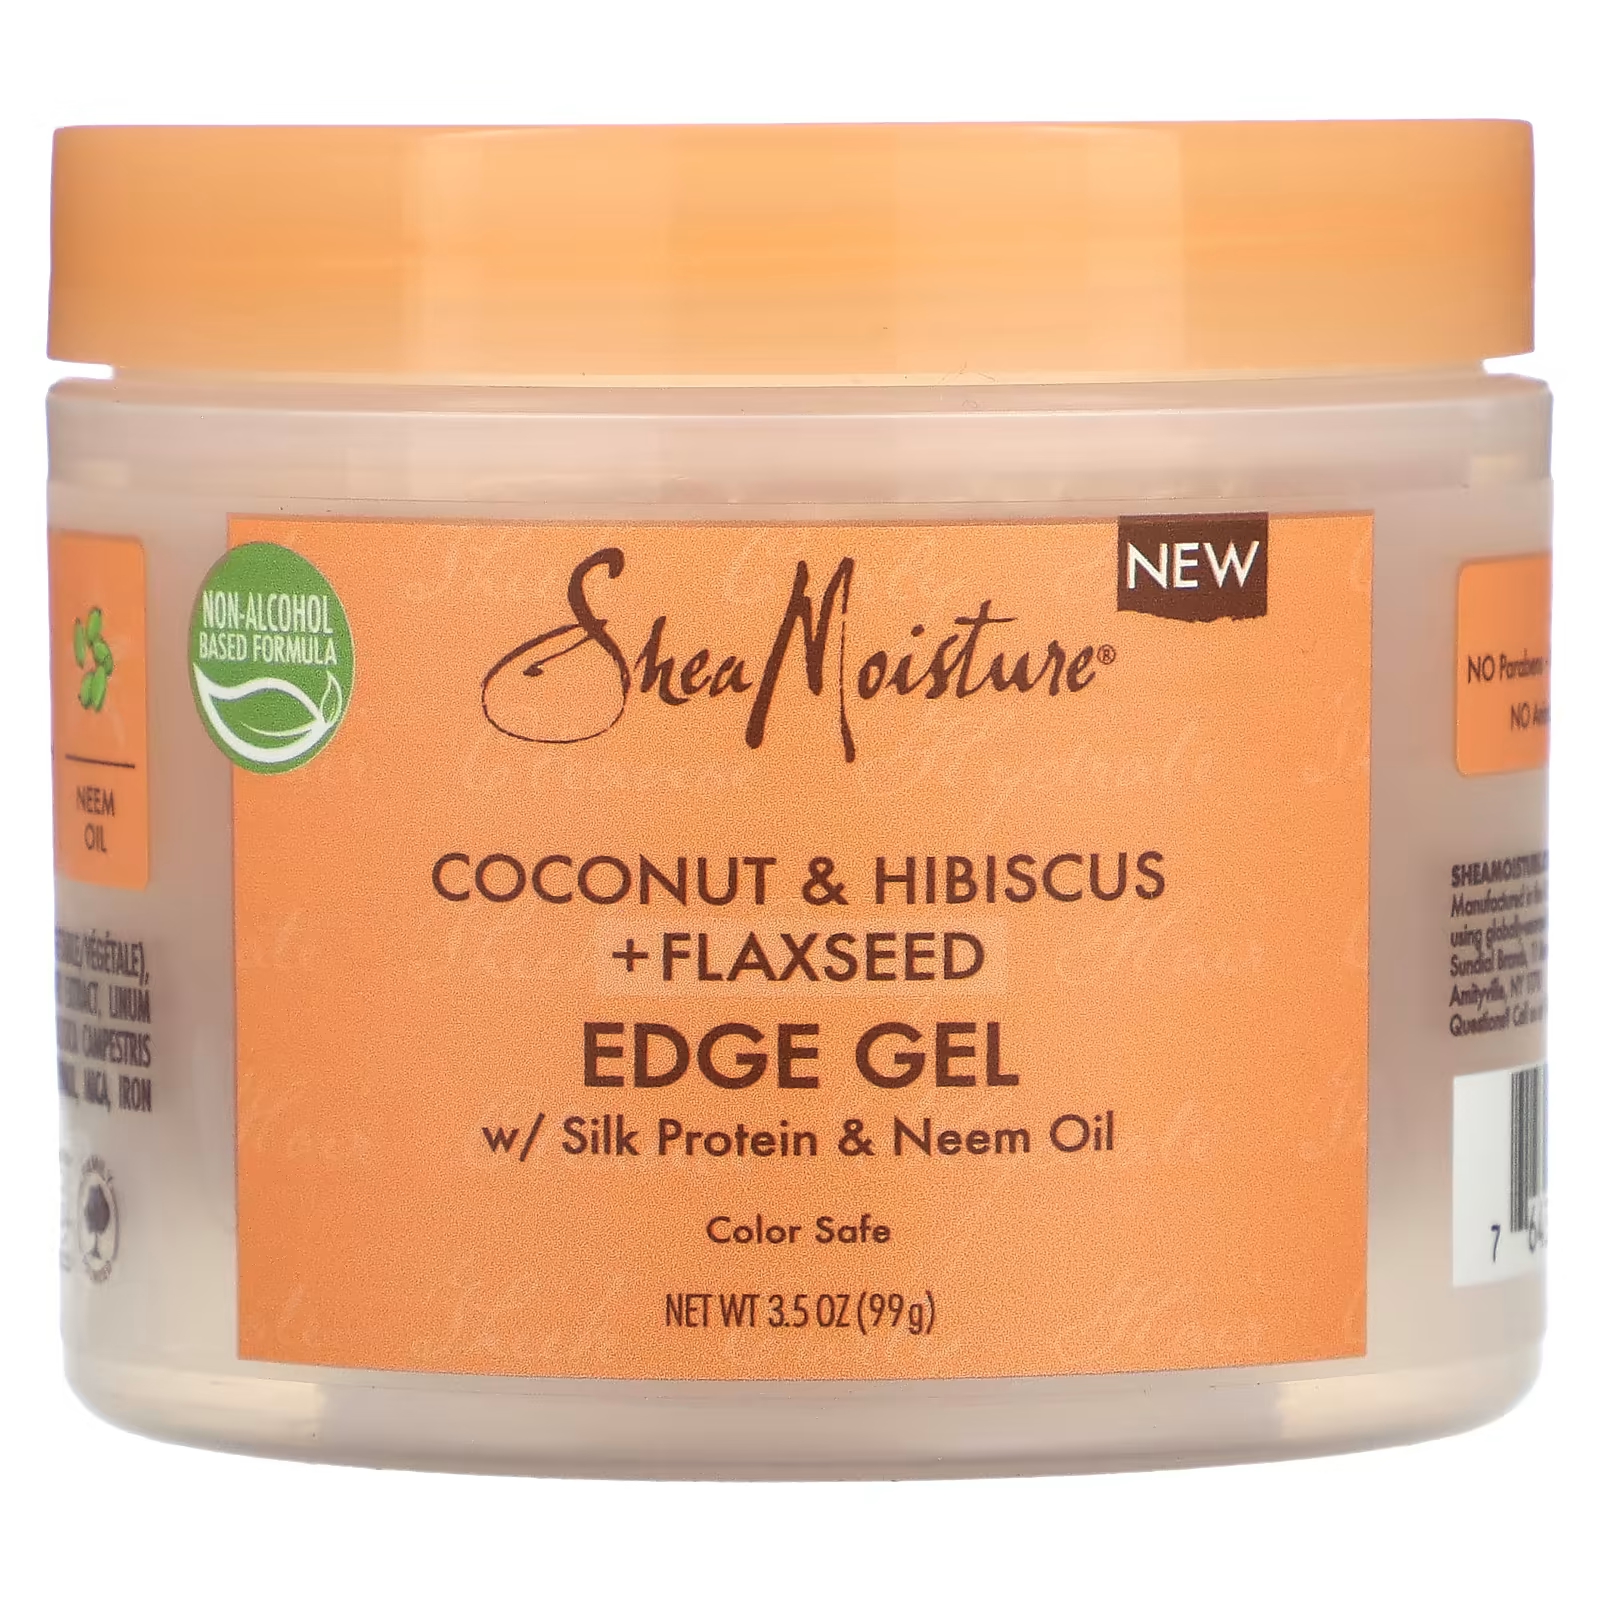 цена Гель для волос SheaMoisture Edge Gel кокос гибискус и льняное семя, 99г